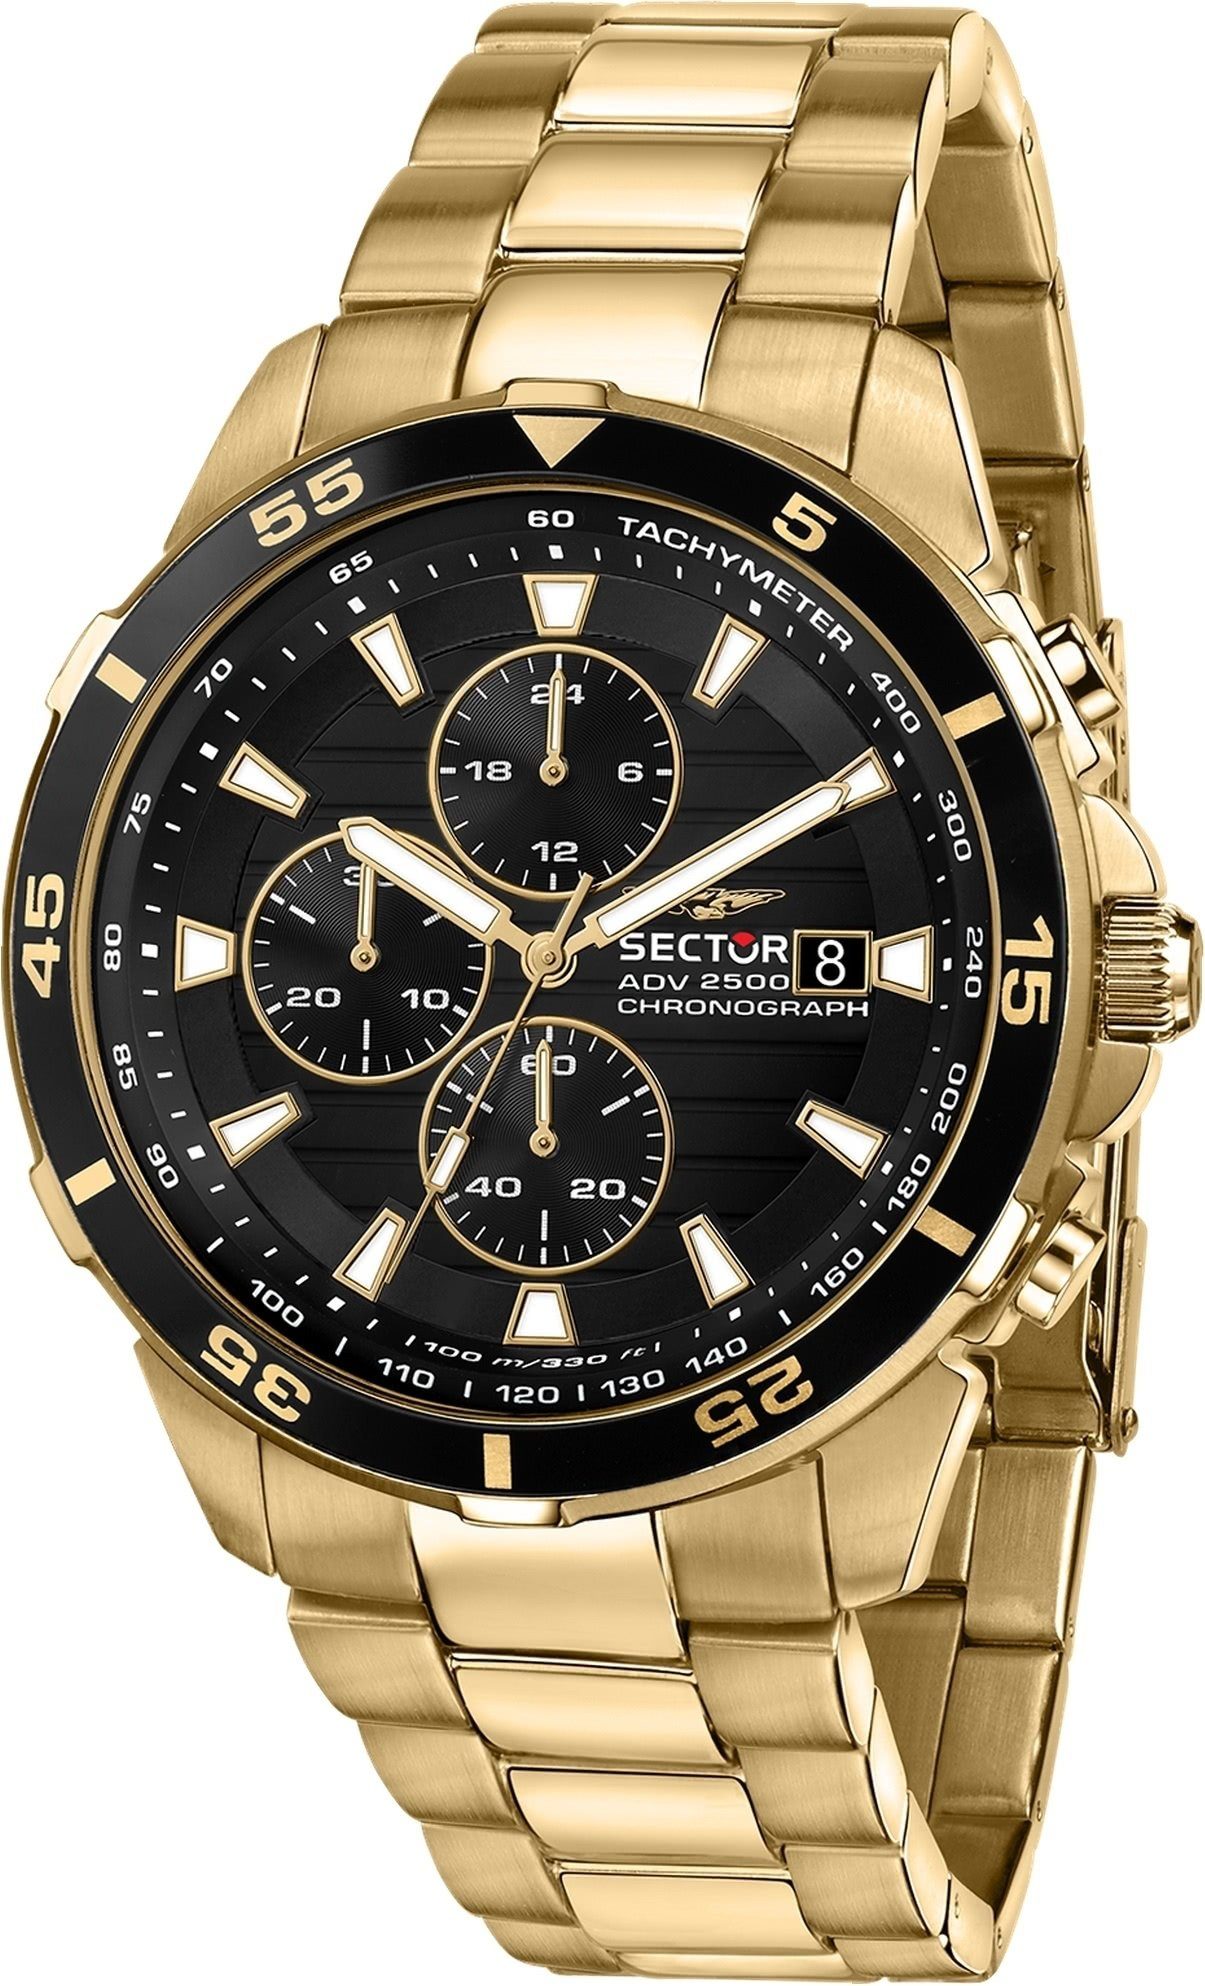 Sector Herren rund, Armbanduhr Fashion Chrono, Edelstahlarmband Herren Armbanduhr (45mm), Sector groß Chronograph gold,